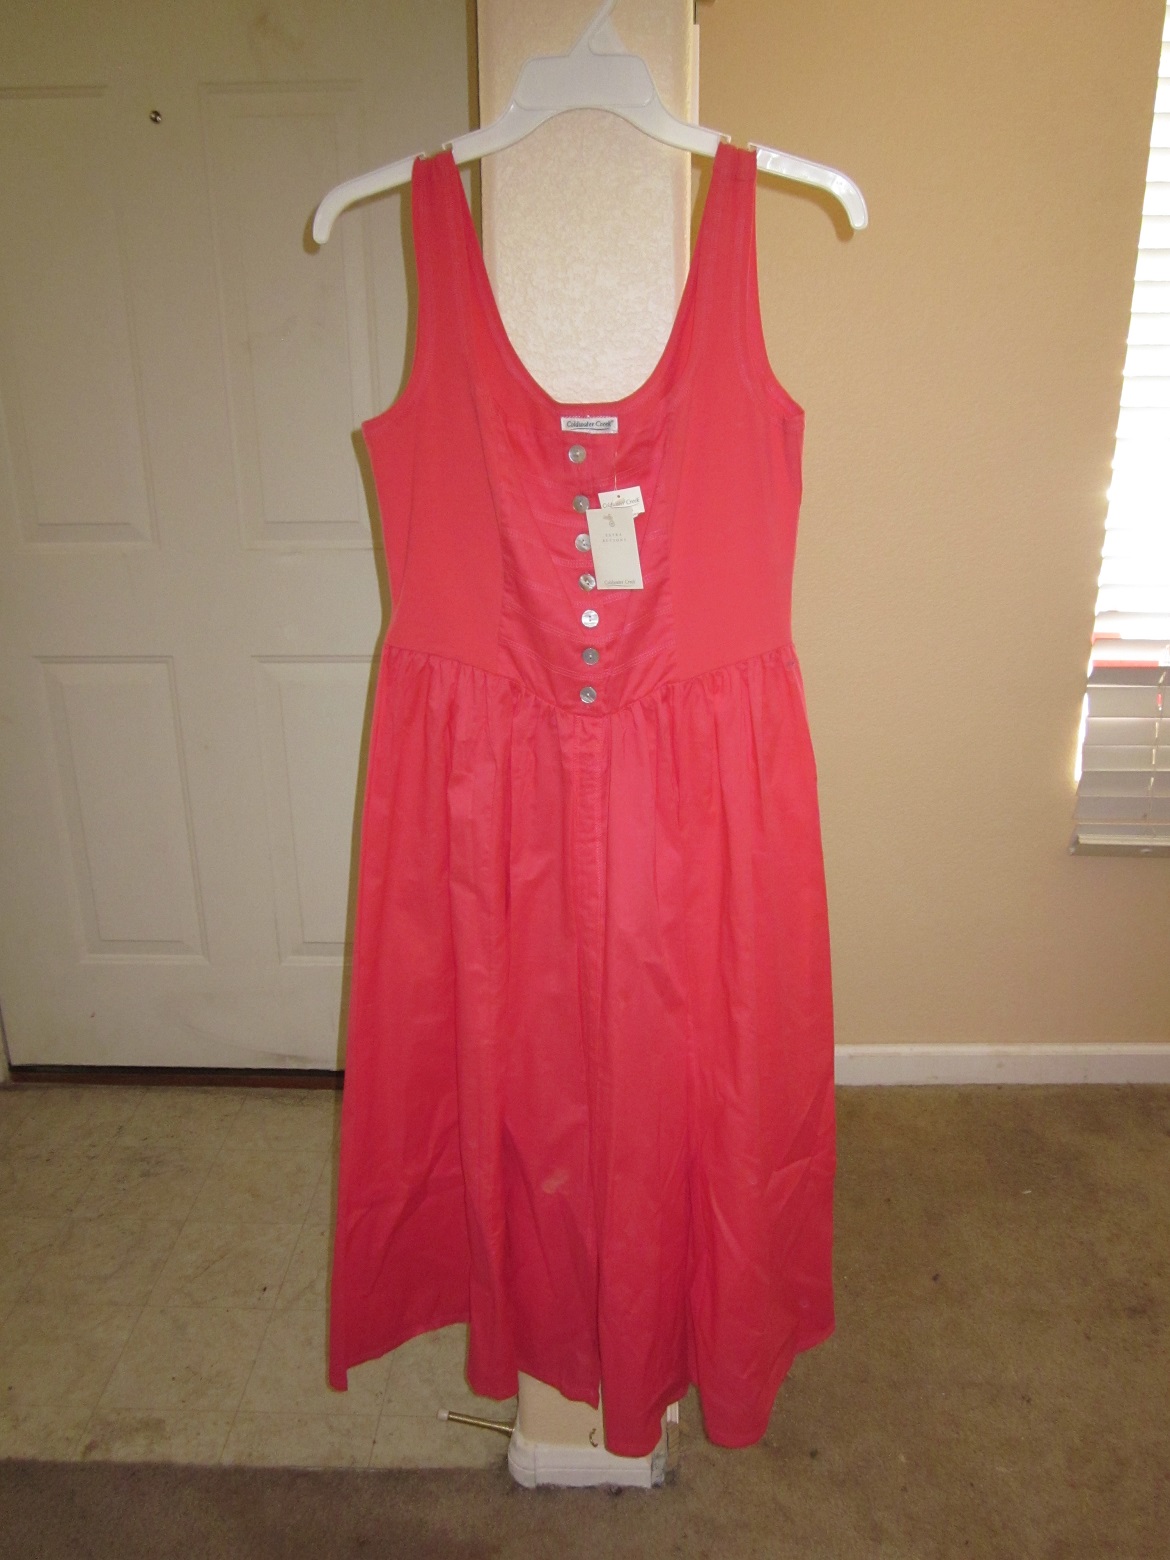 Coldwater Creek Dress - Size PM